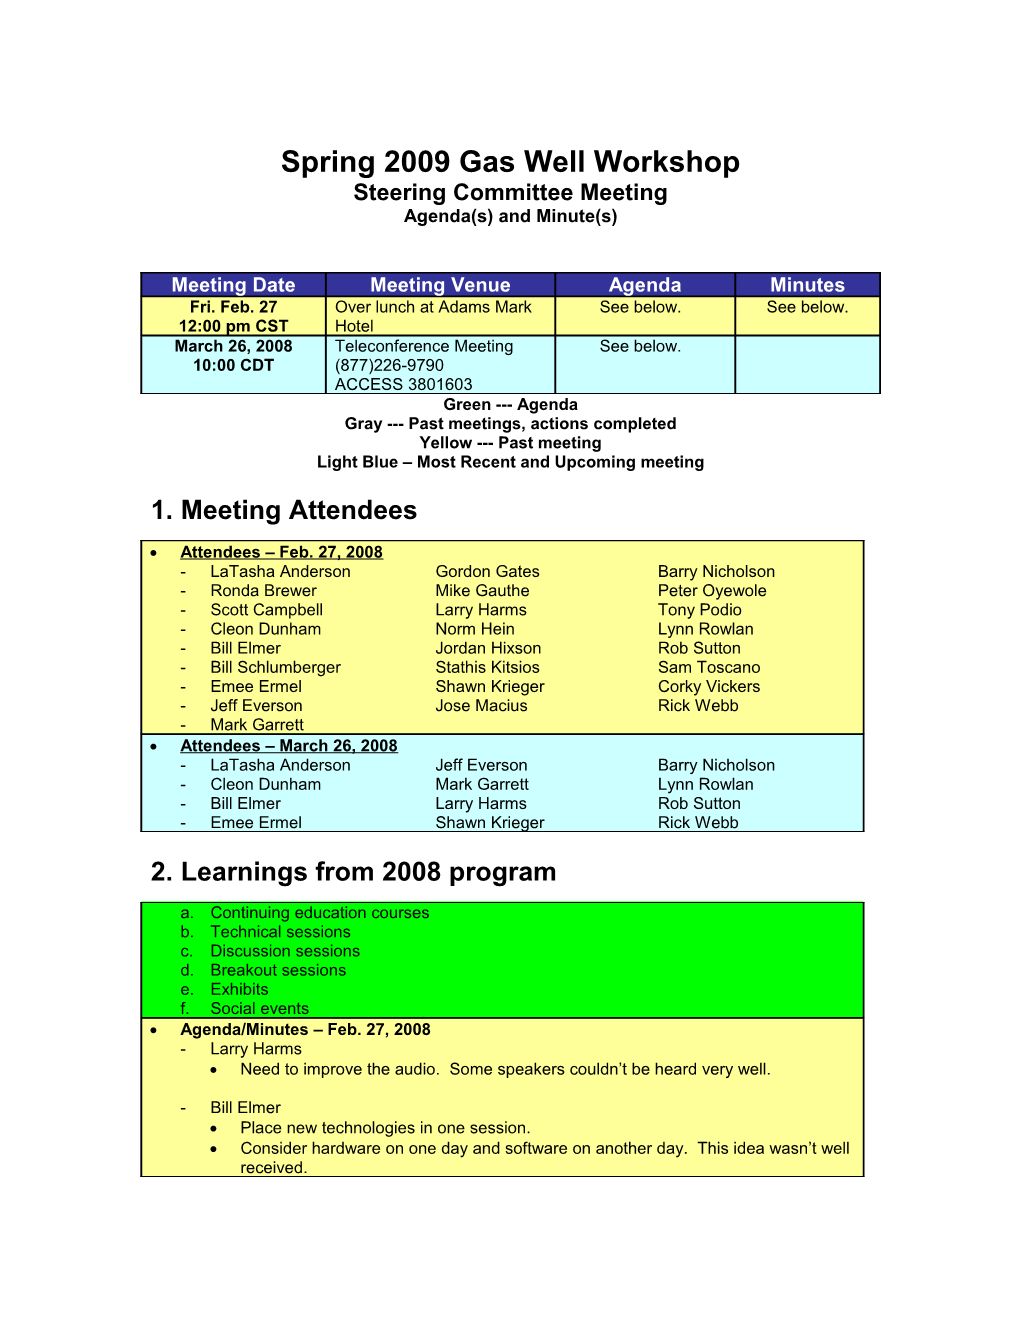 Spring 2005 Gas-Lift Workshop s1